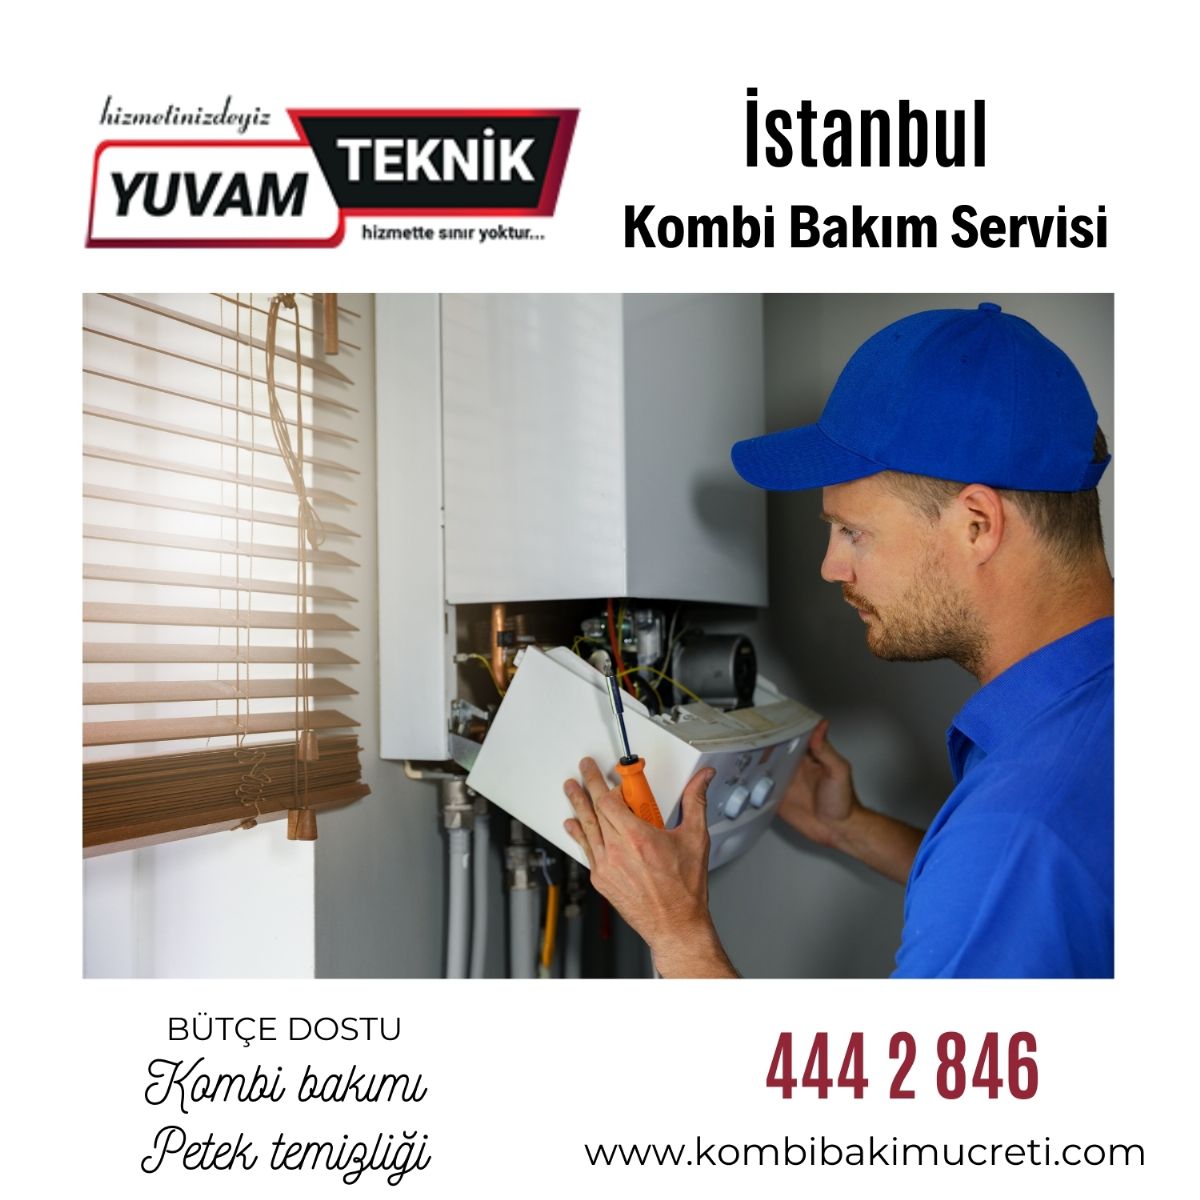 İstanbul kombi bakım servisi 444 28 46